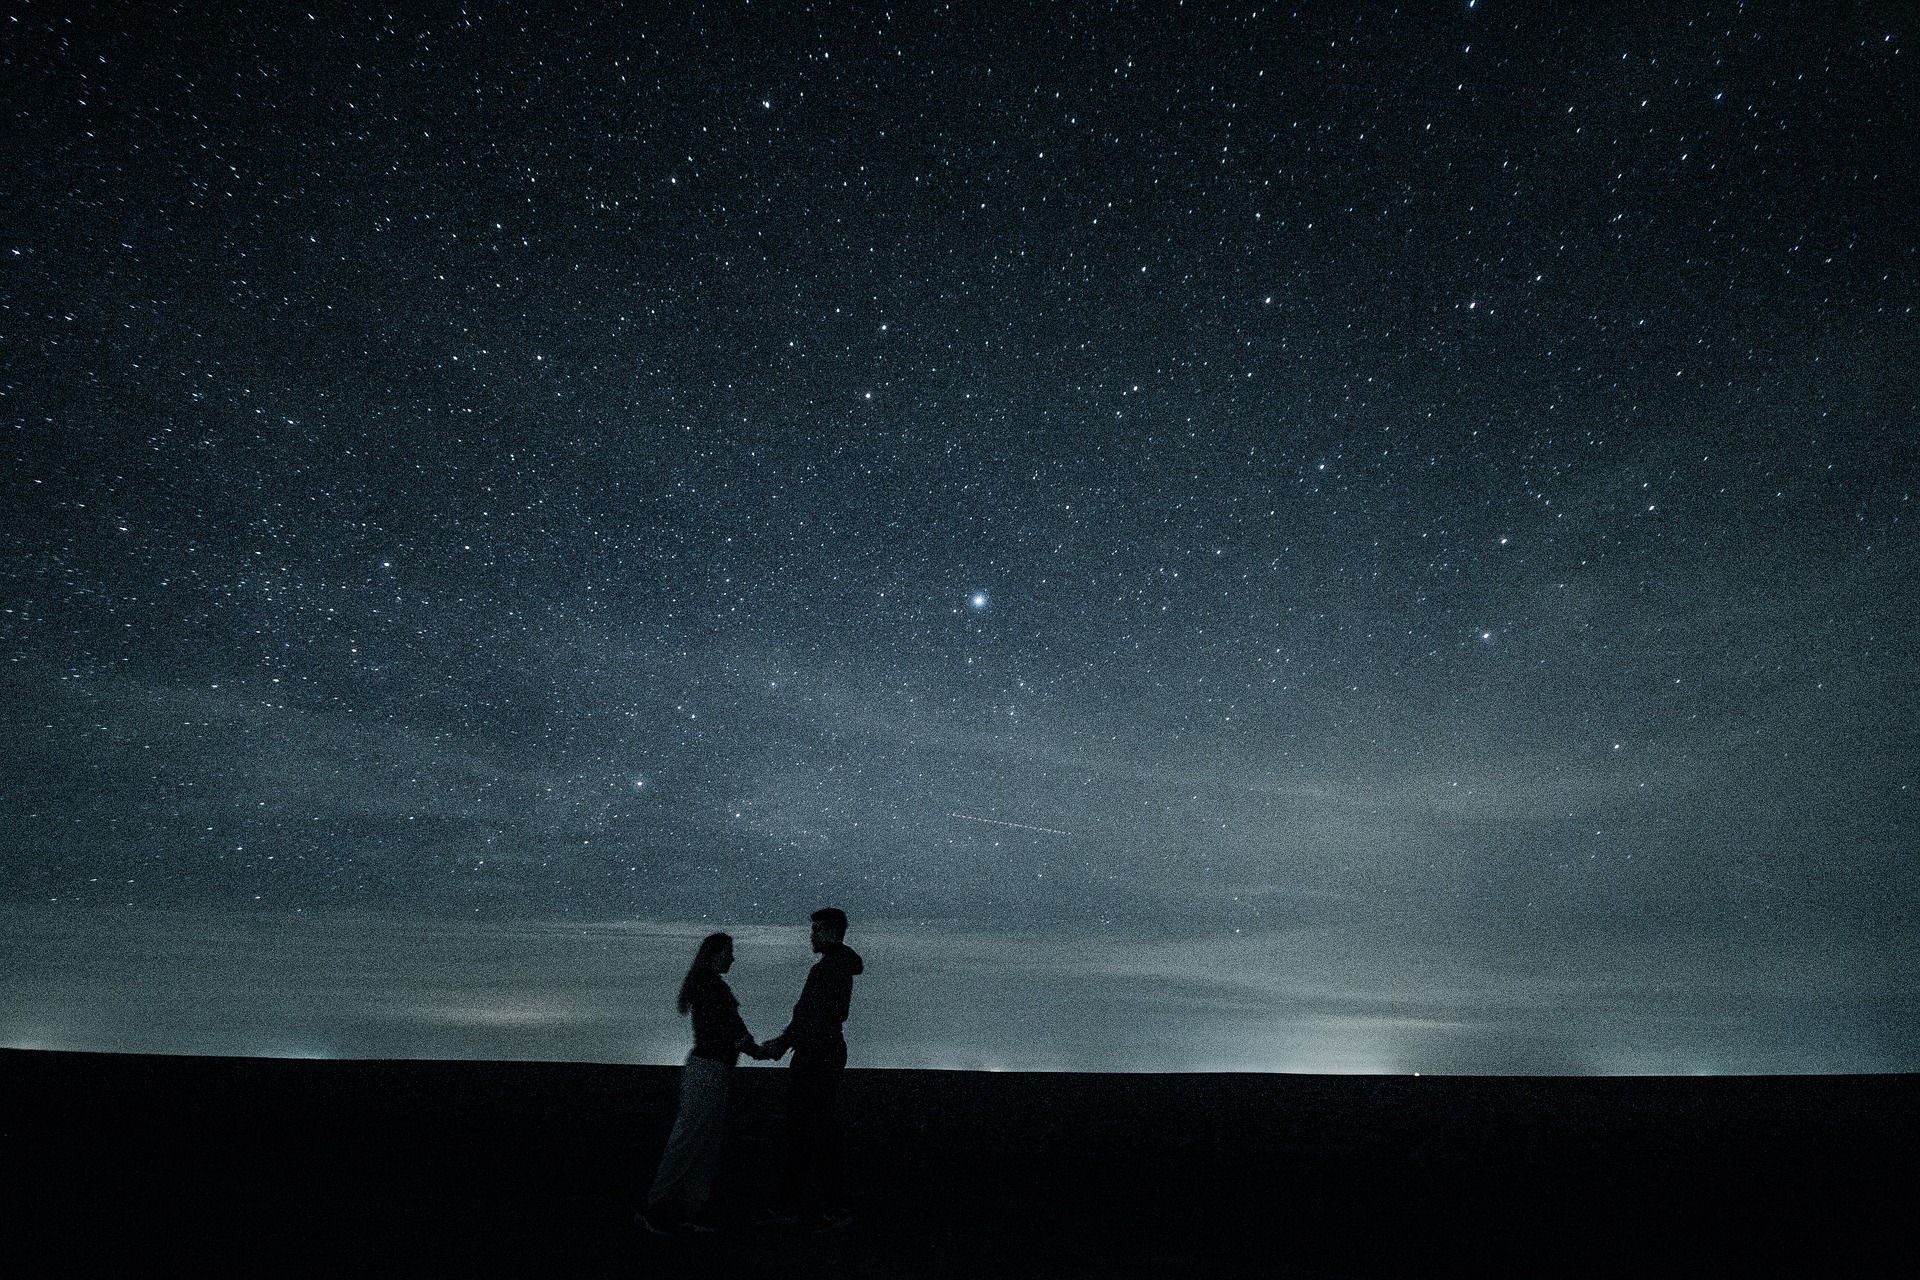 По ночам несмотря на звездное небо сырая. Под звездным небом. Ночное небо со звездами. Ночное небо романтика. Пара на фоне звездного неба.